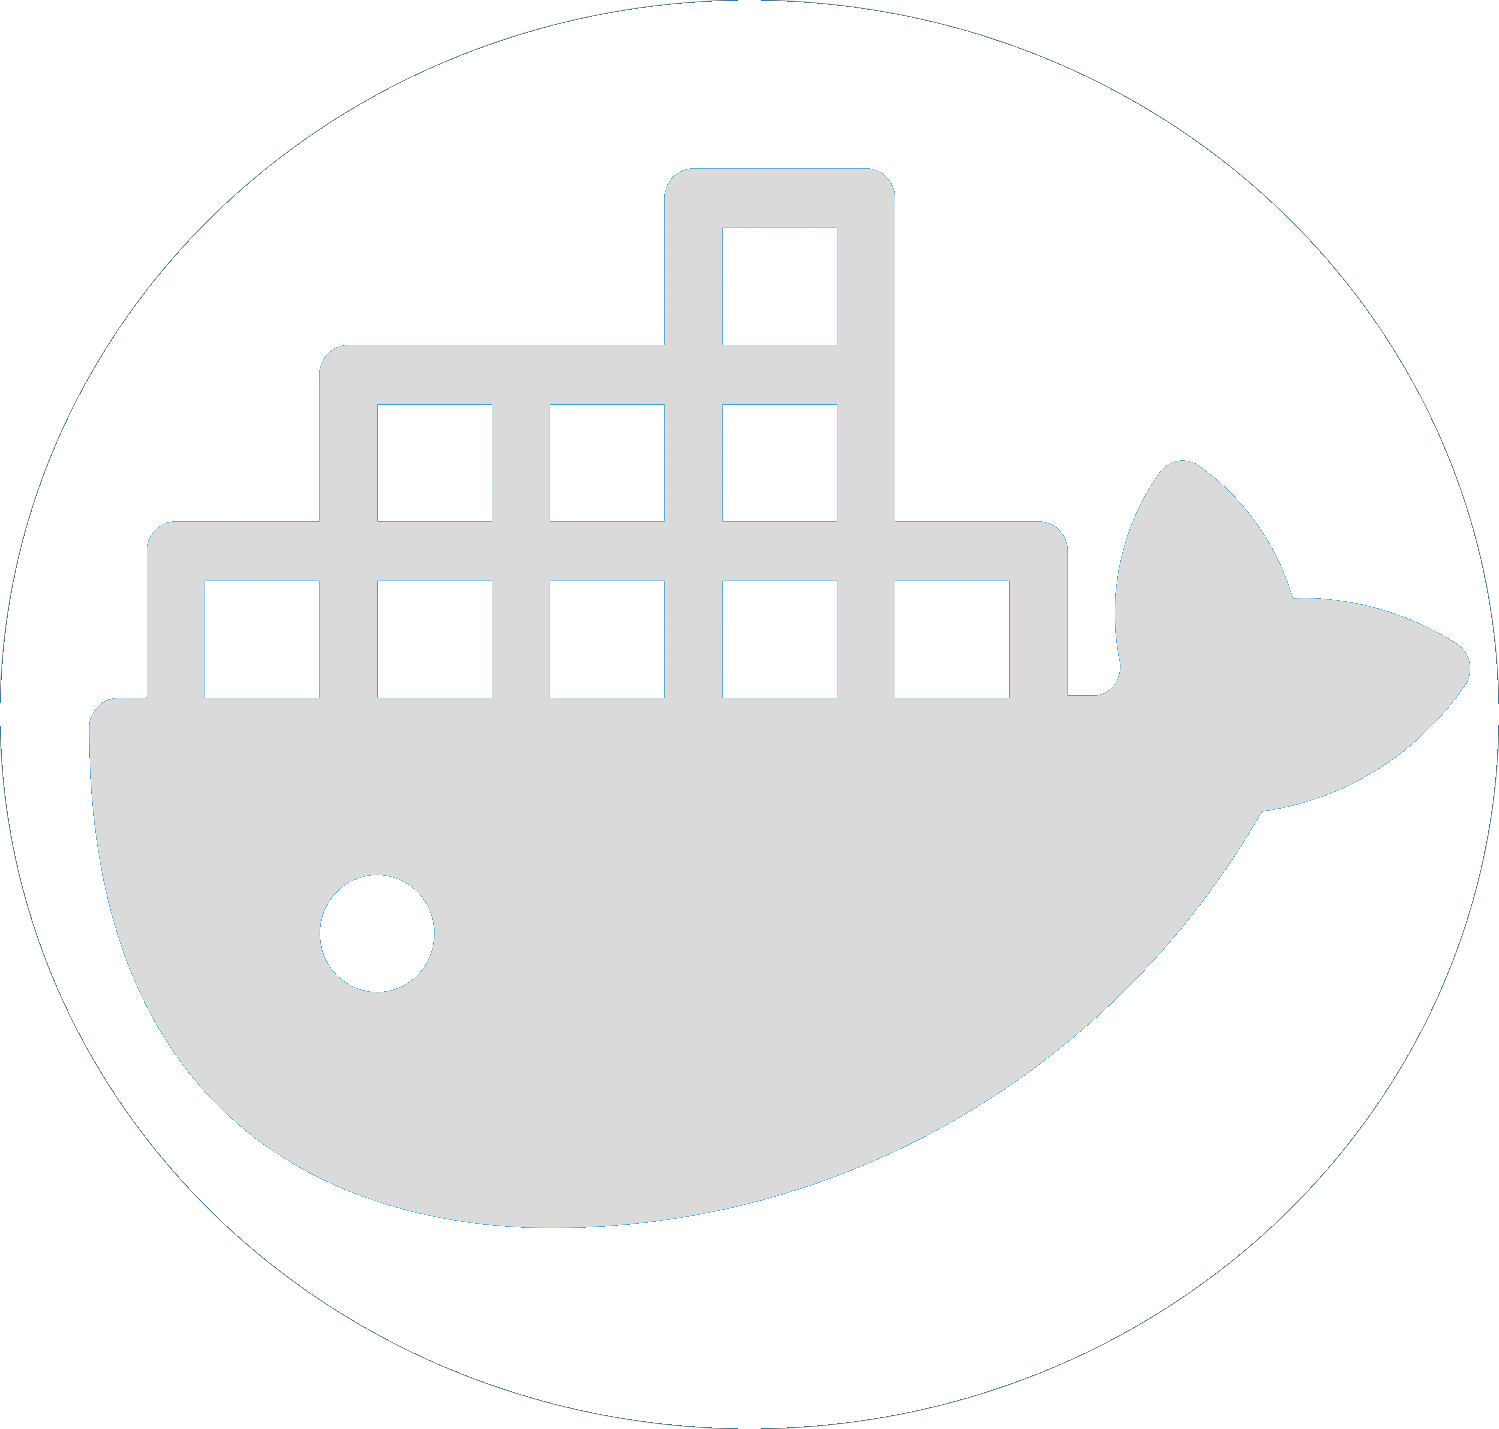 Default Docker icon.